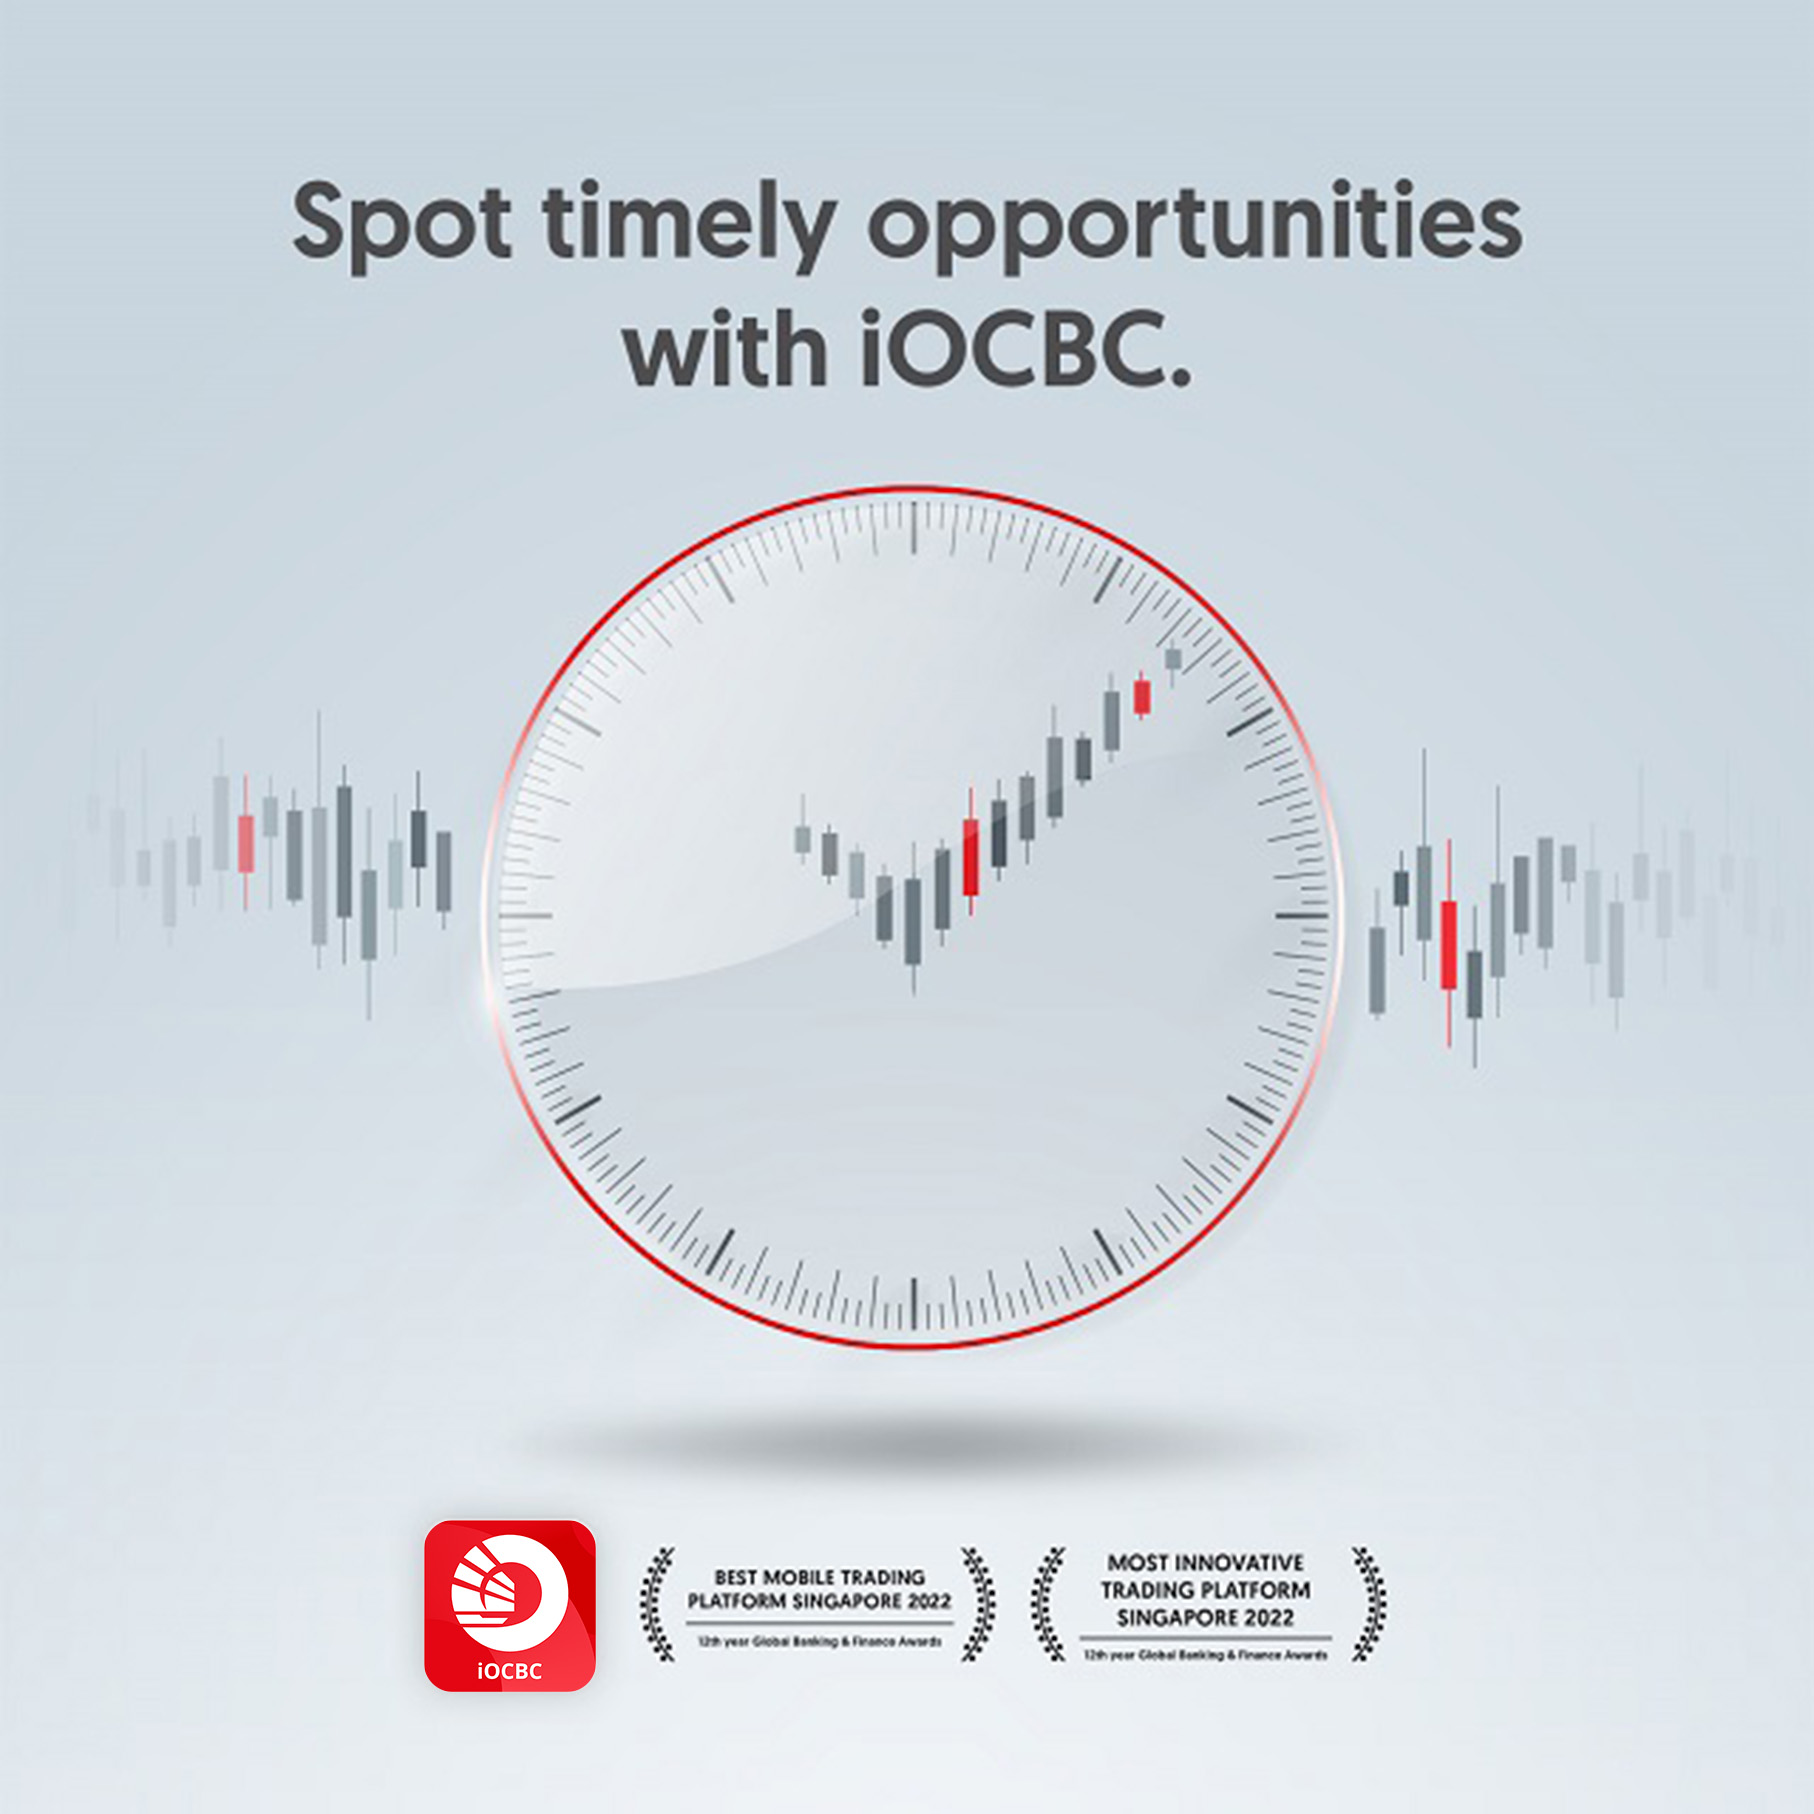 Basic Trading Account opening promotion with iOCBC trading platform